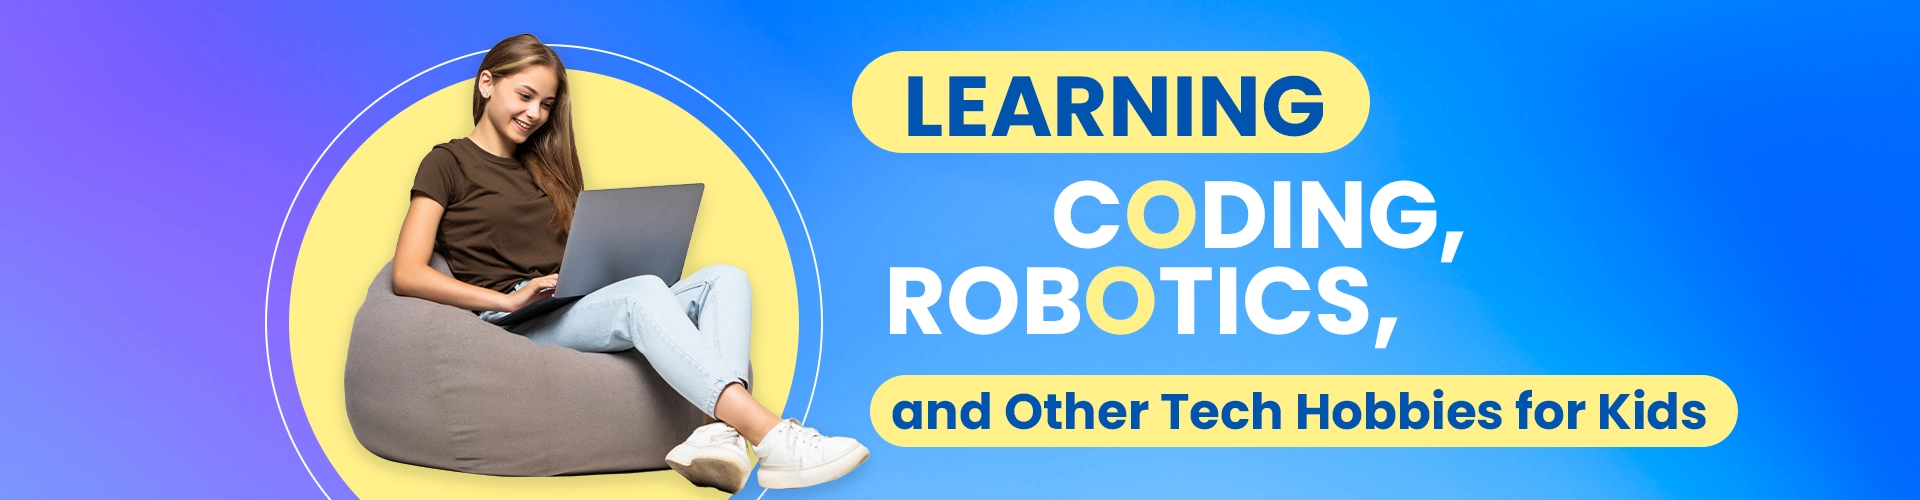 Learning Coding, Robotics